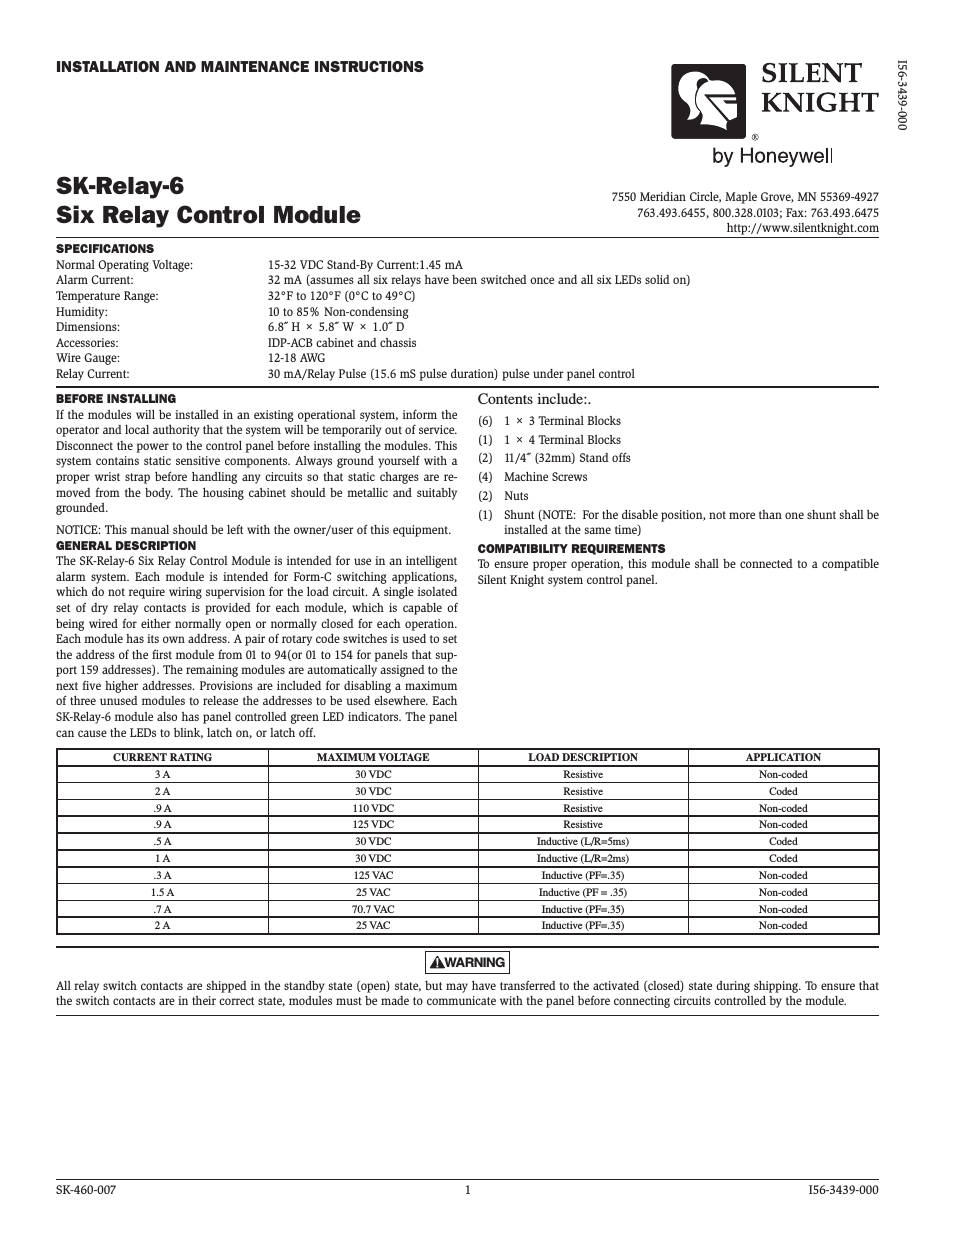 SK-Relay-6 Addressable Six Relay Module